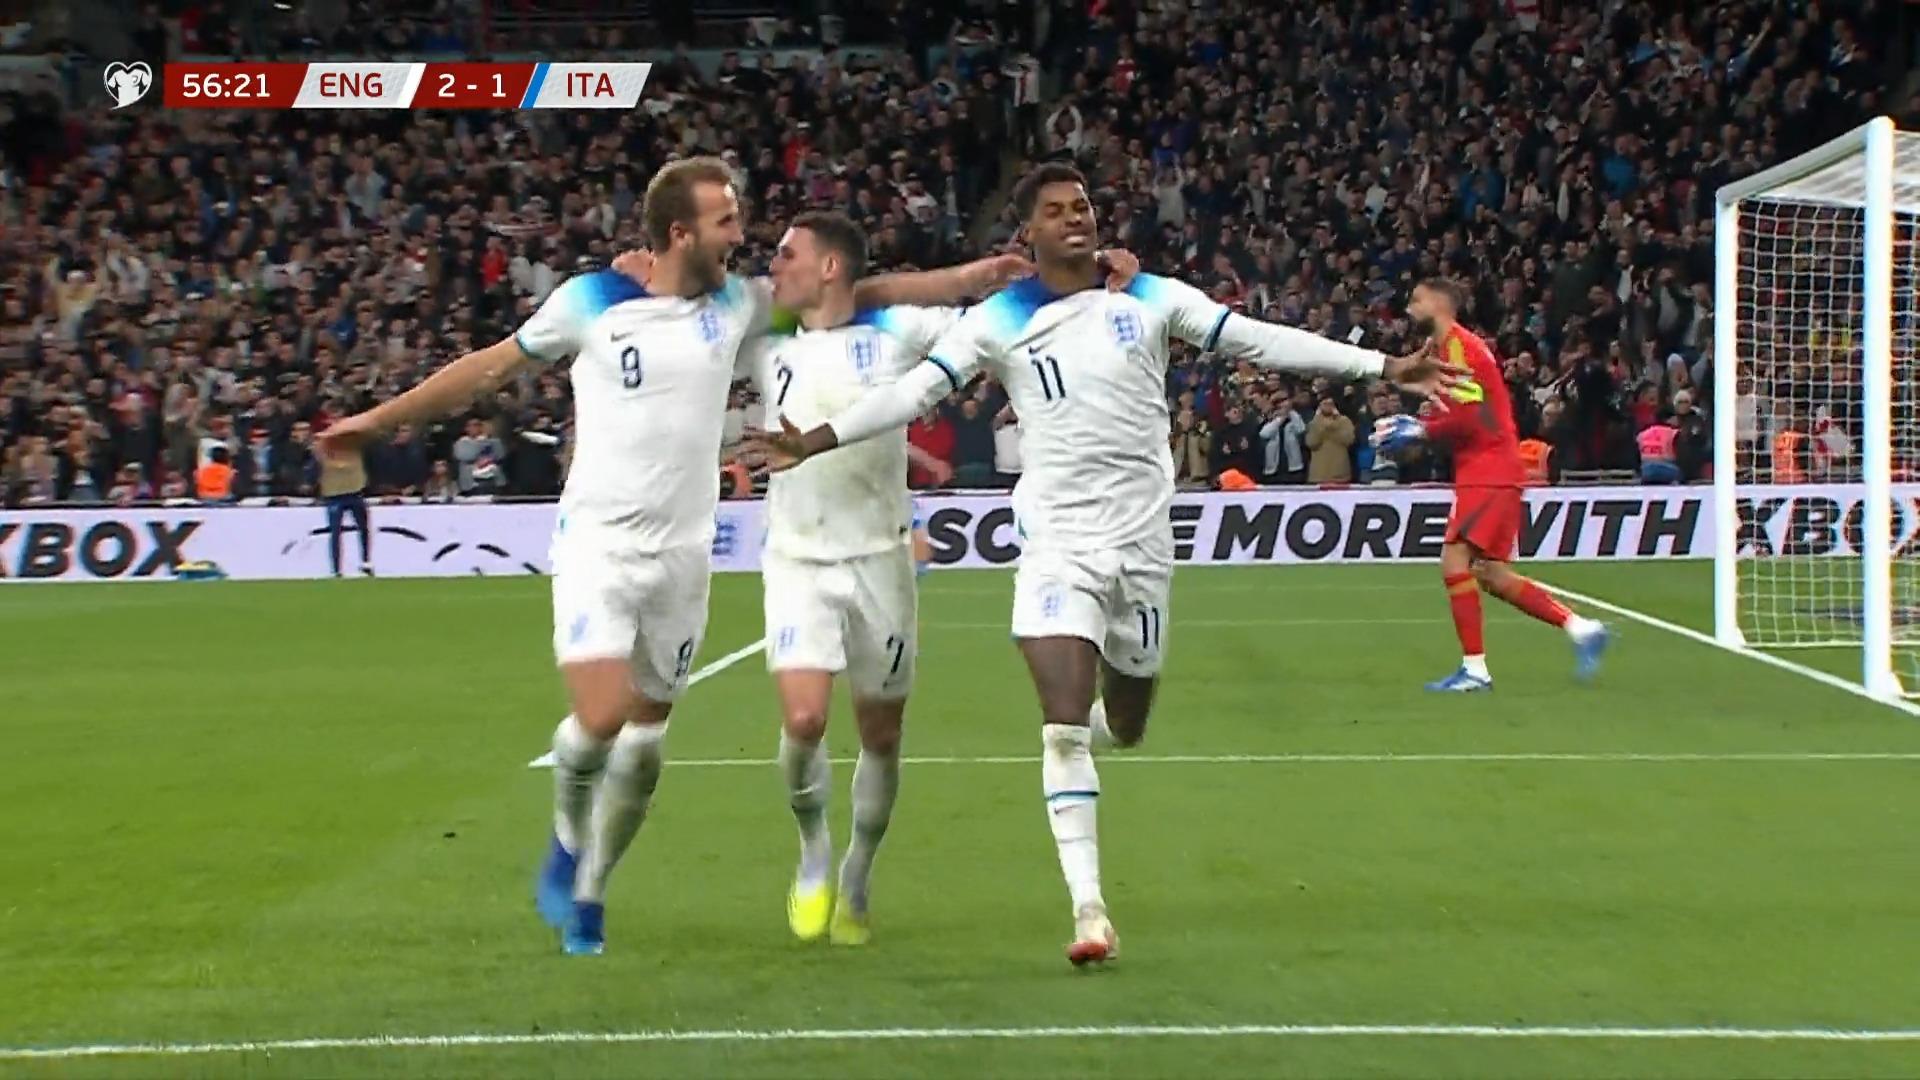 Harry Kane trascina l'Inghilterra agli Europei - L'Italia spacca Wembley Tutti gli highlights dal pacer